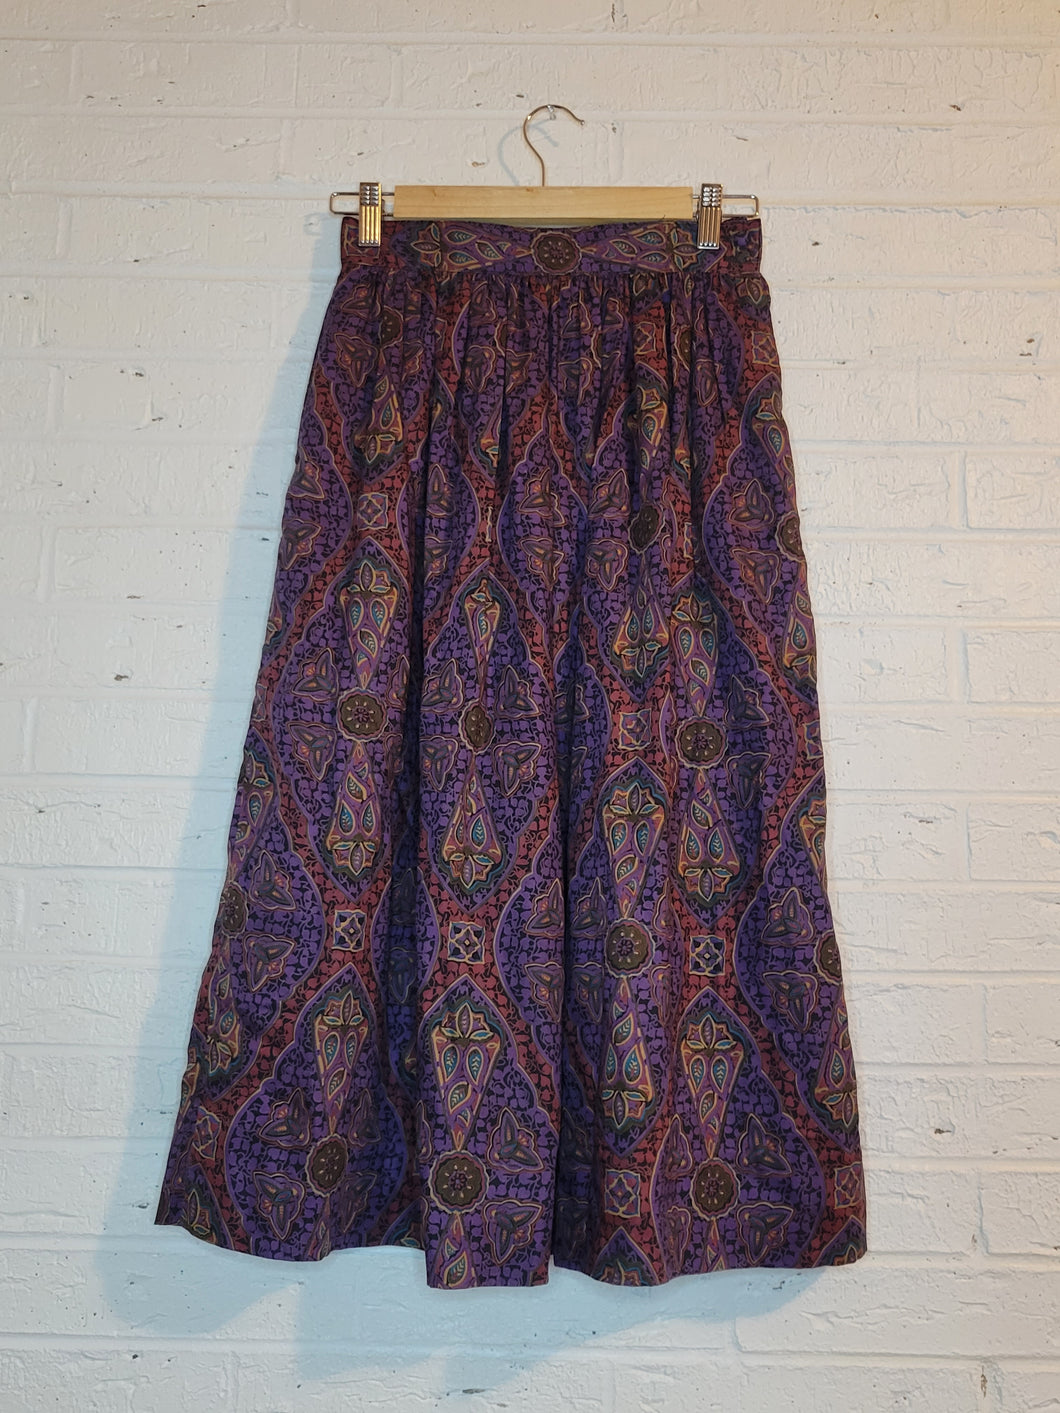 XS - purple skirt